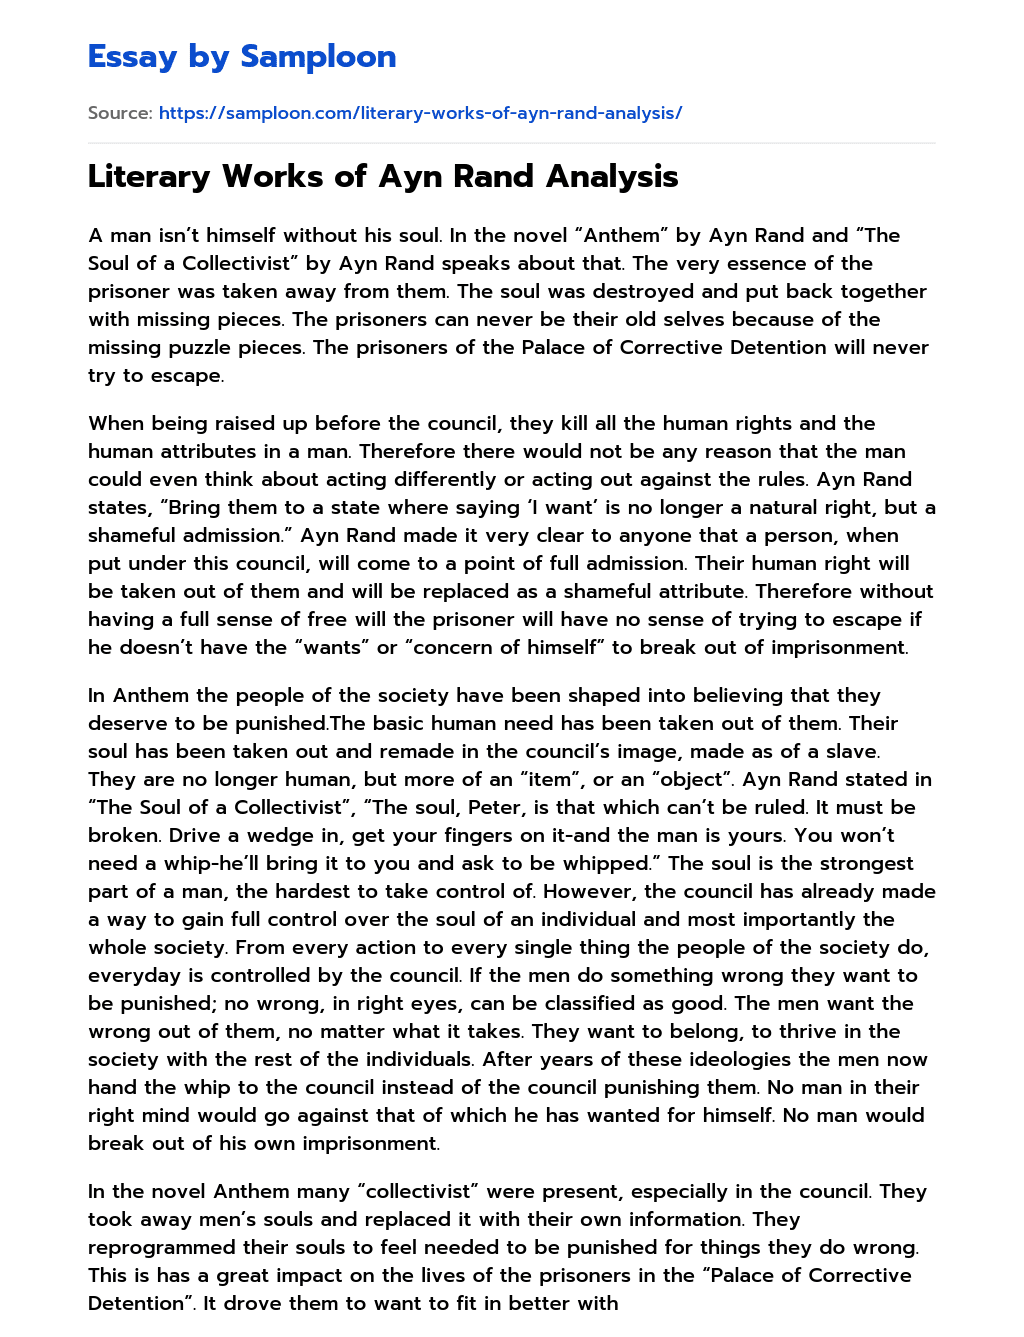 Literary Works of Ayn Rand Analysis essay